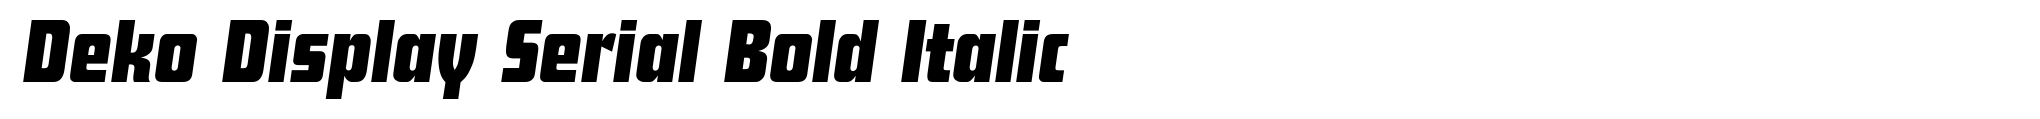 Deko Display Serial Bold Italic image